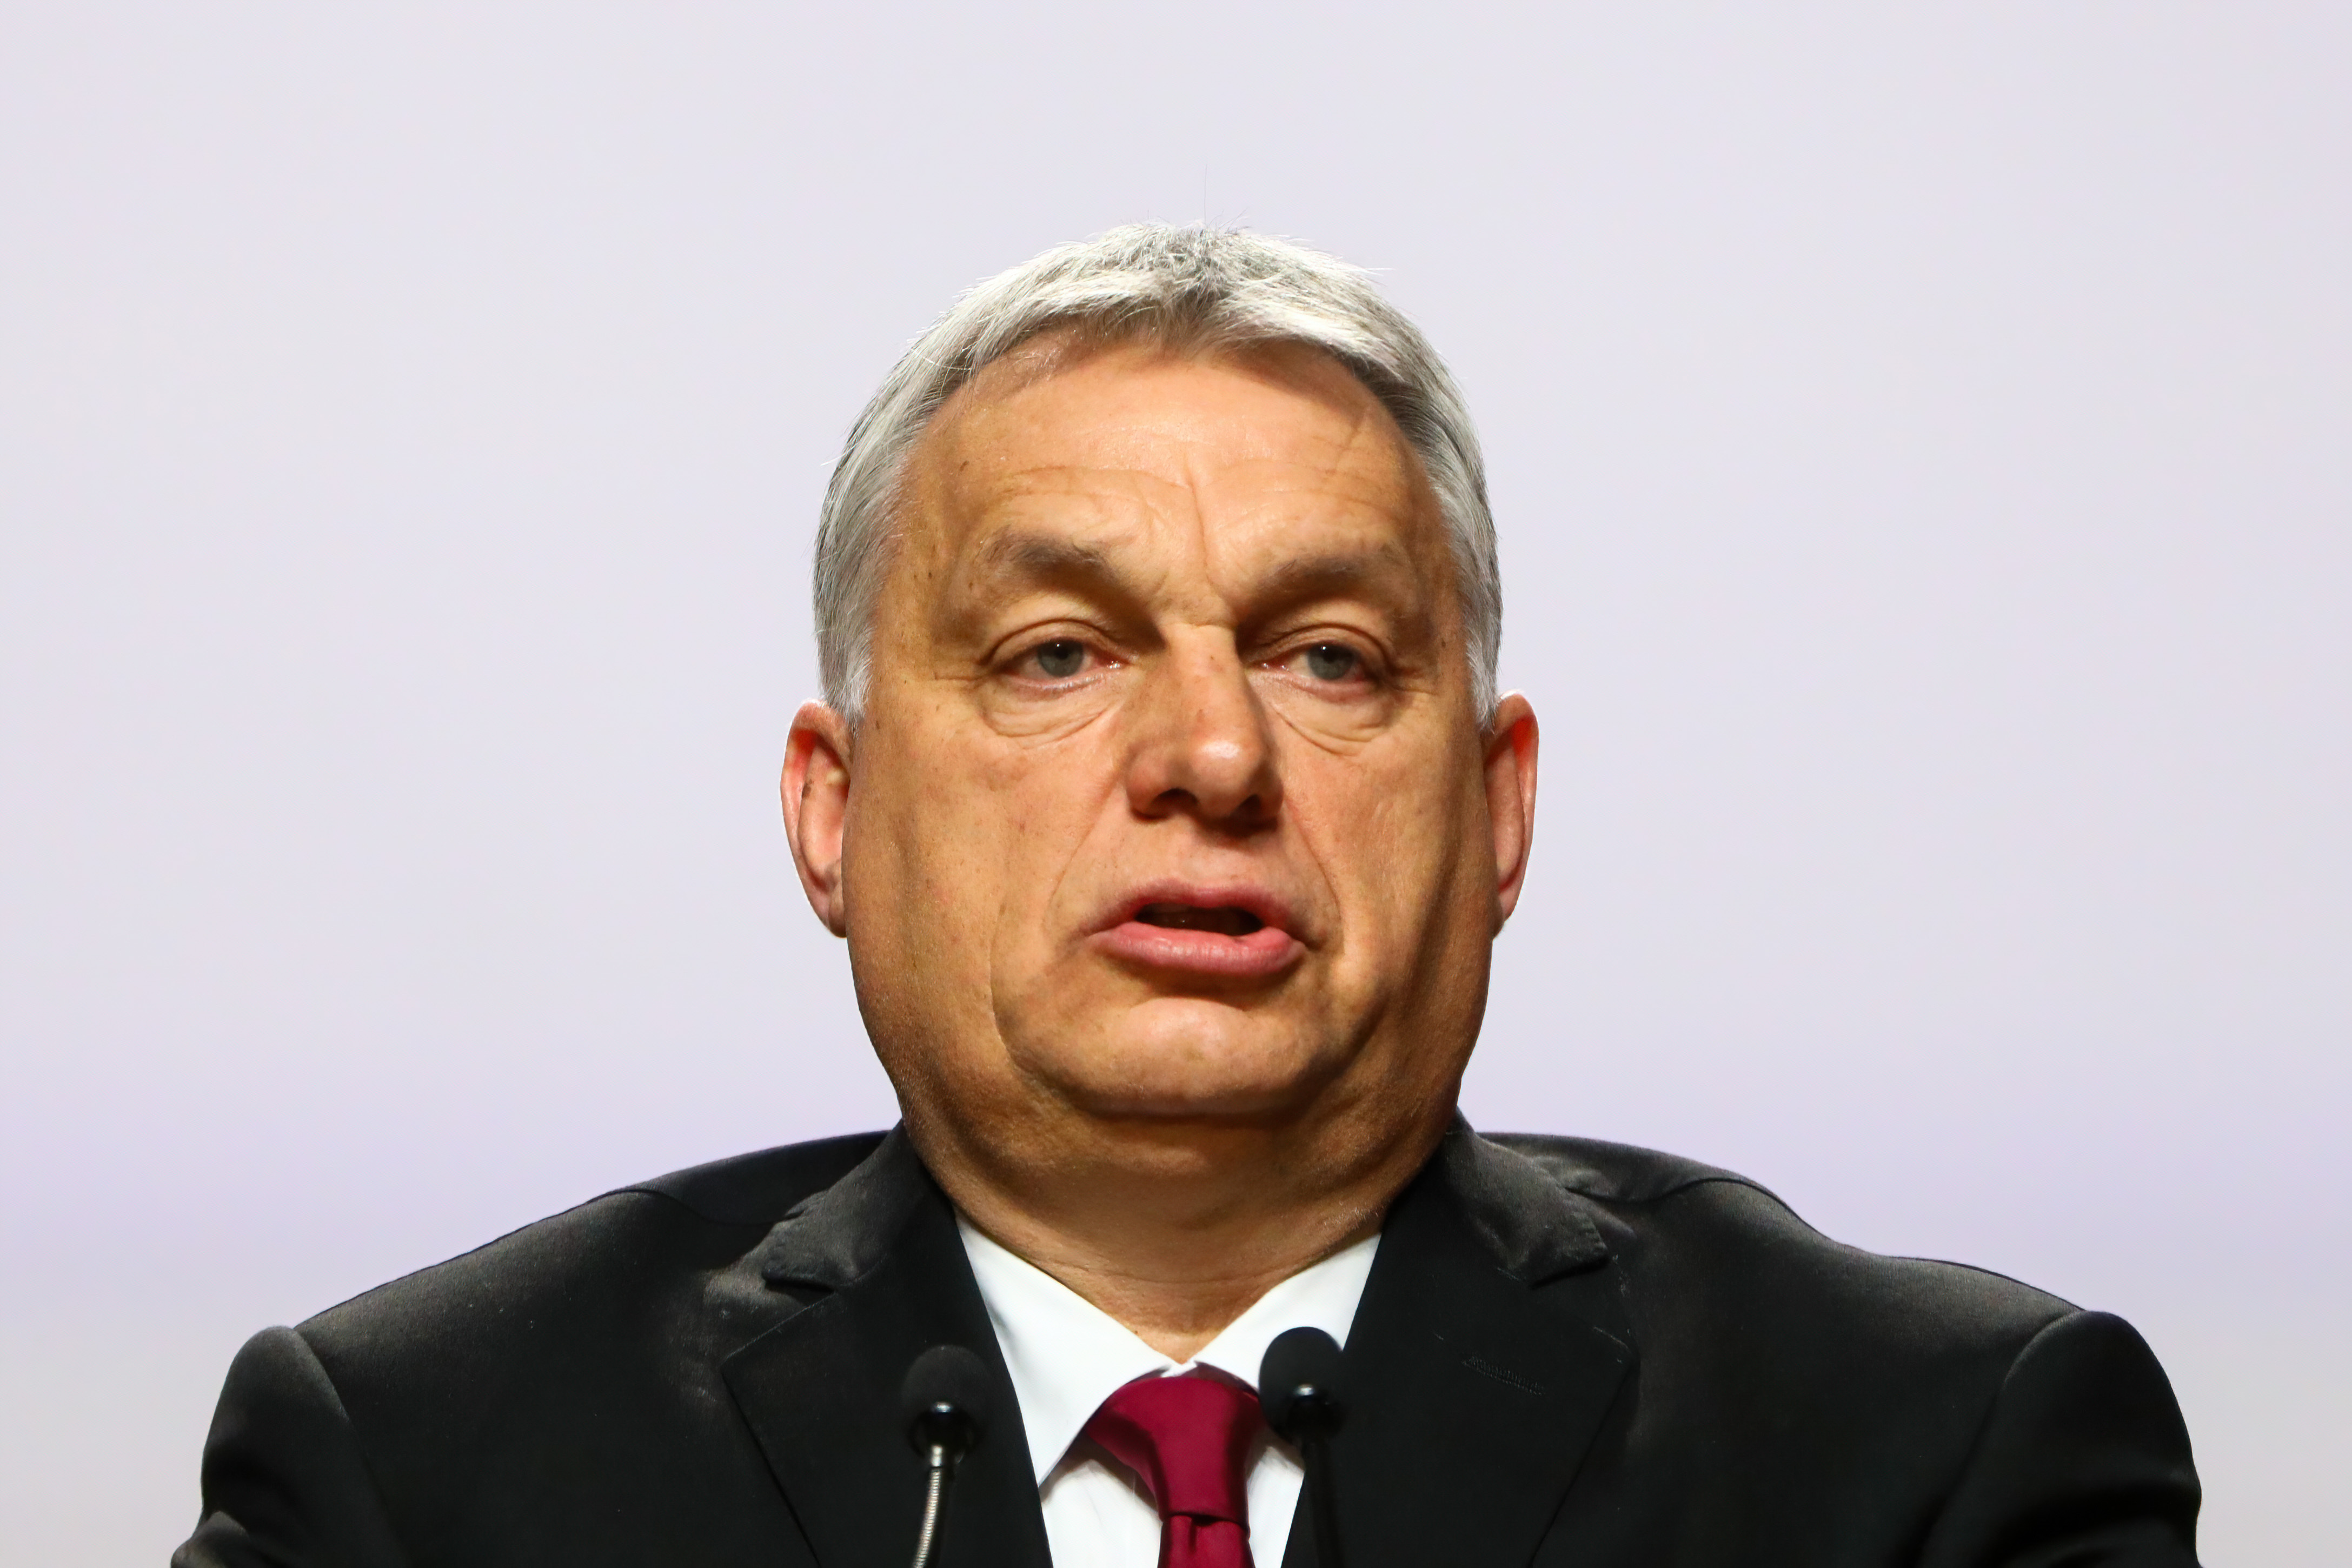 The Hungarian Prime Minister Viktor Orbán